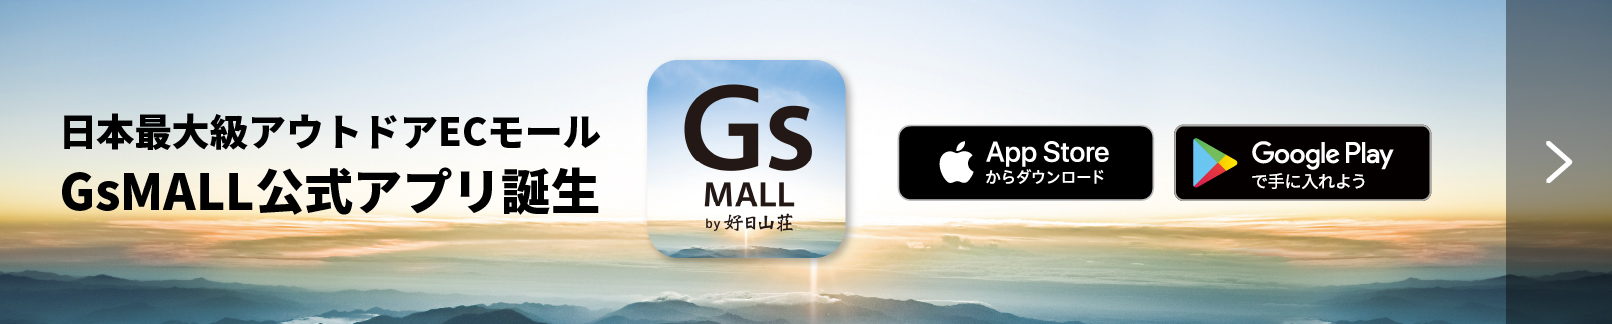 GsMALL 公式アプリ誕生